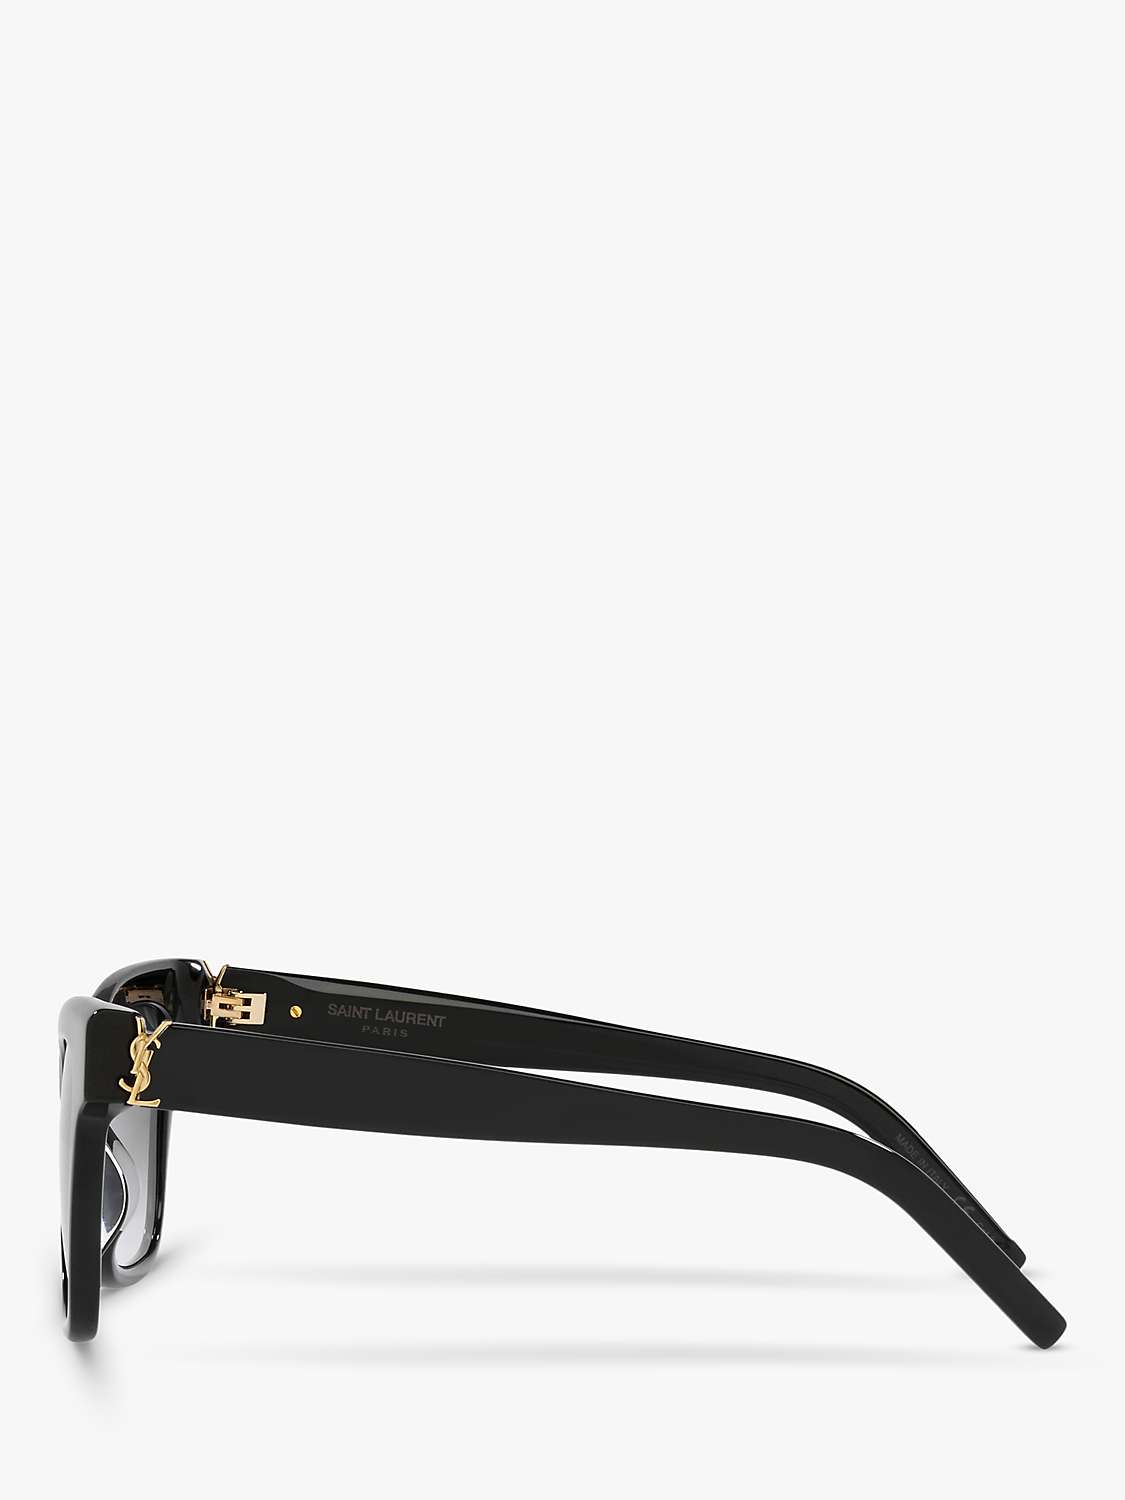 Buy Yves Saint Laurent YS000436 Women's Cat's Eye Sunglasses, Black/Grey Gradient Online at johnlewis.com